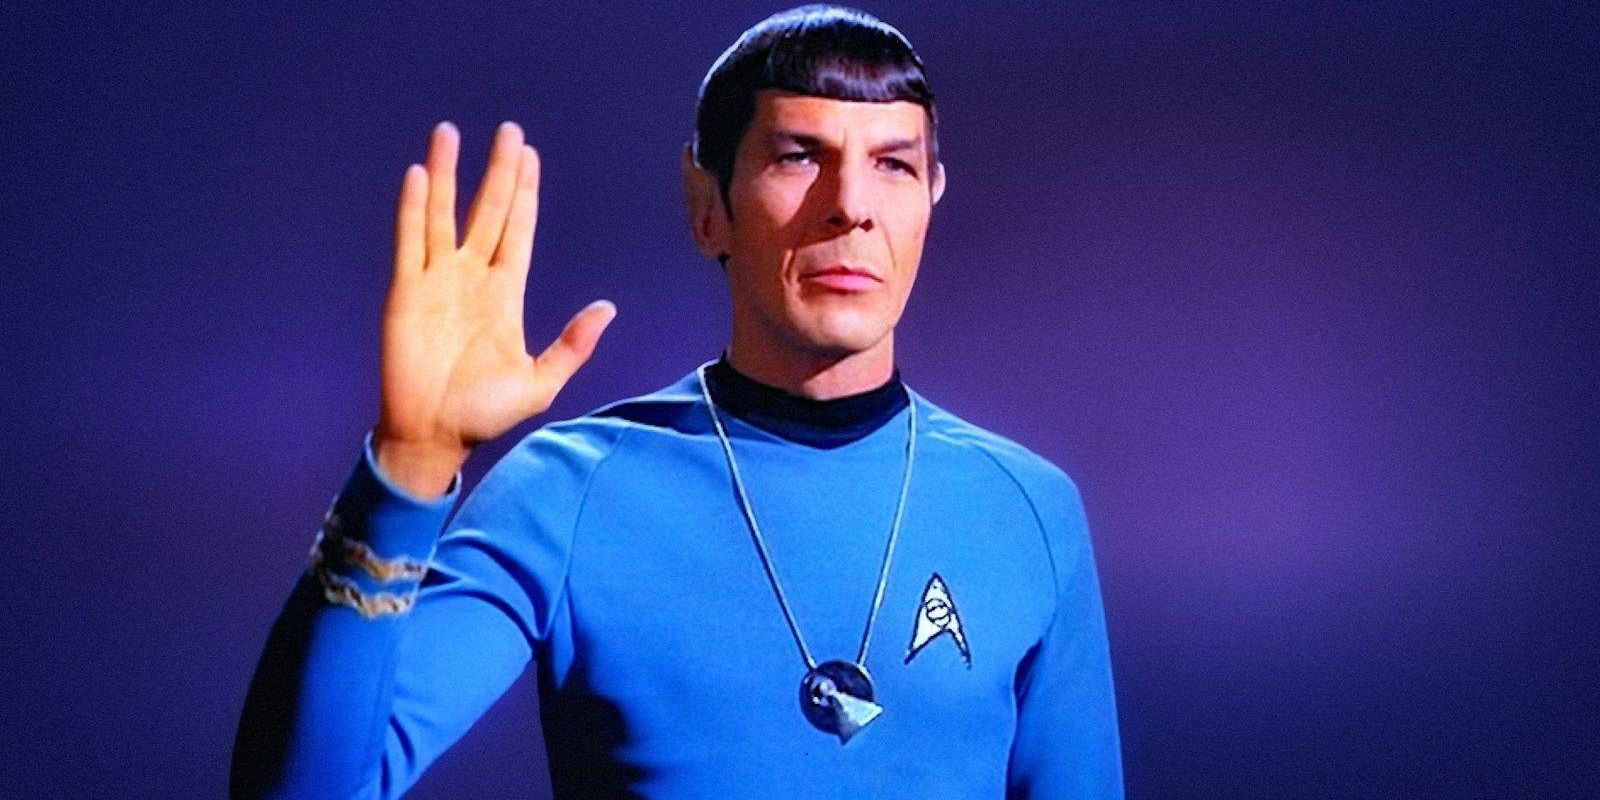 Leonard Nimoy as Spock showing the Vulcan salute in Star Trek.